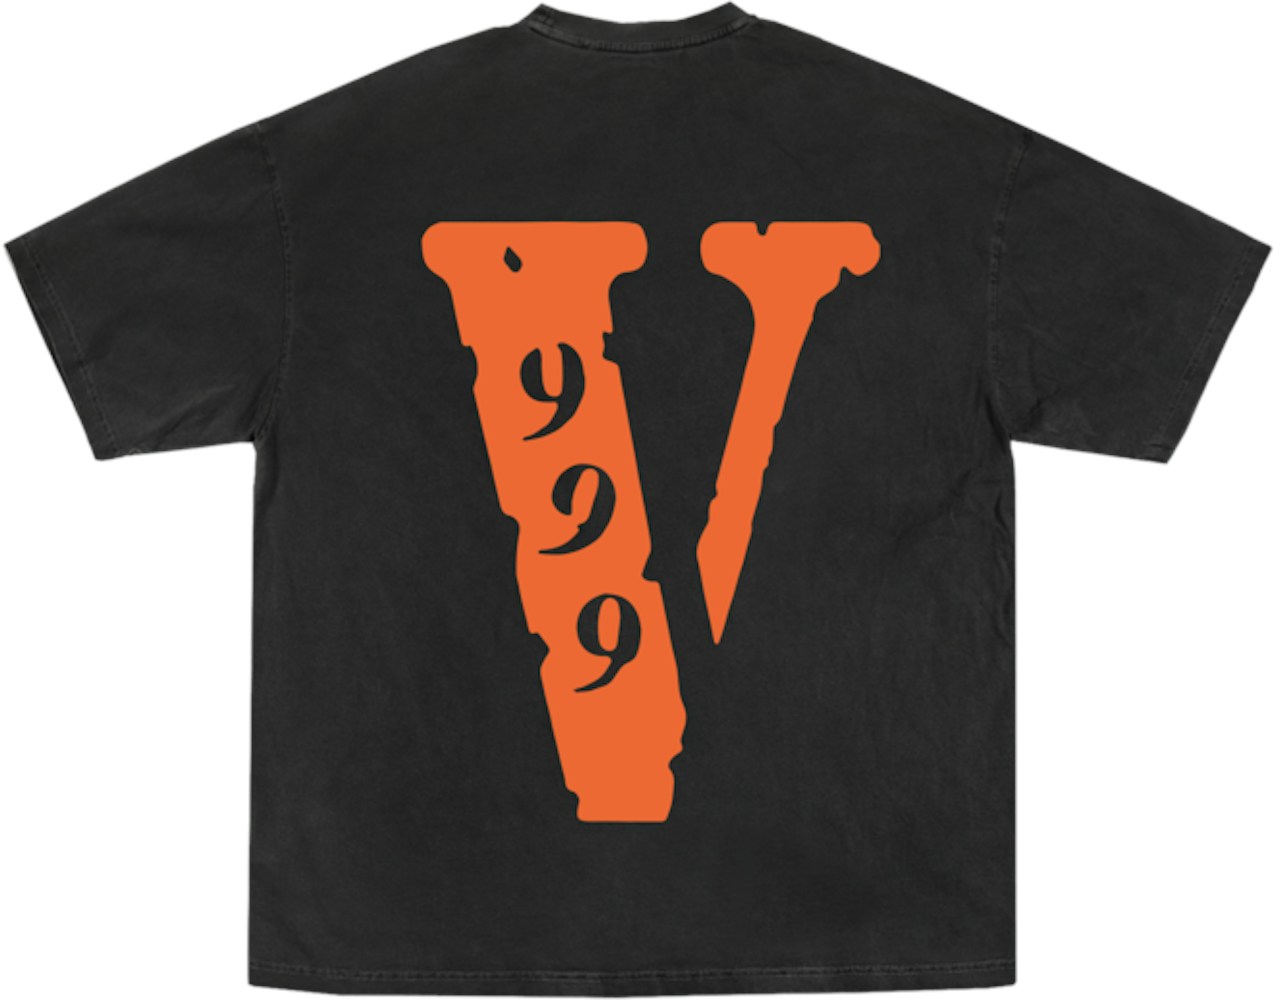 Juice Wrld x Vlone 999 T-Shirt Black - SS20